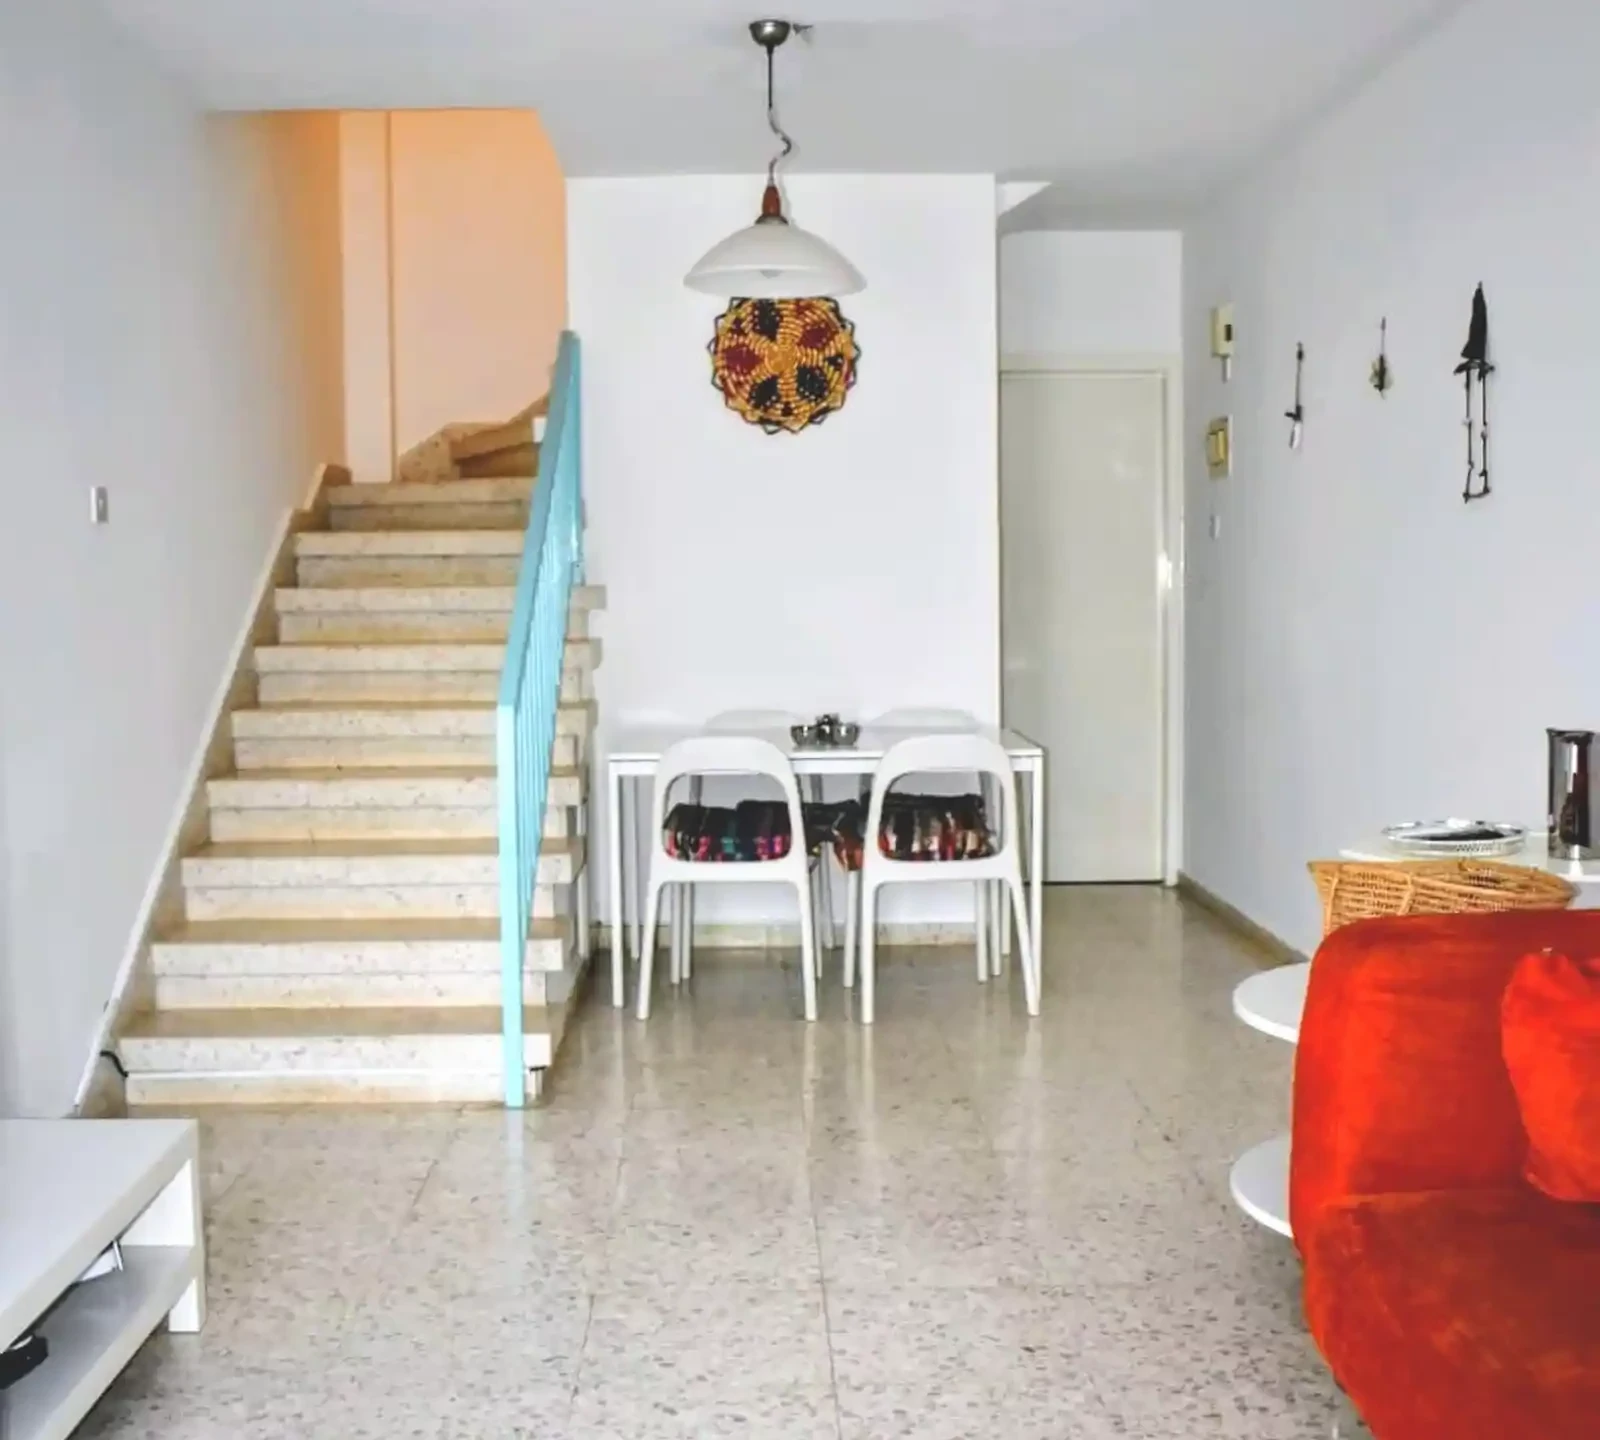 2-bedroom maisonette to rent €1.100, image 1